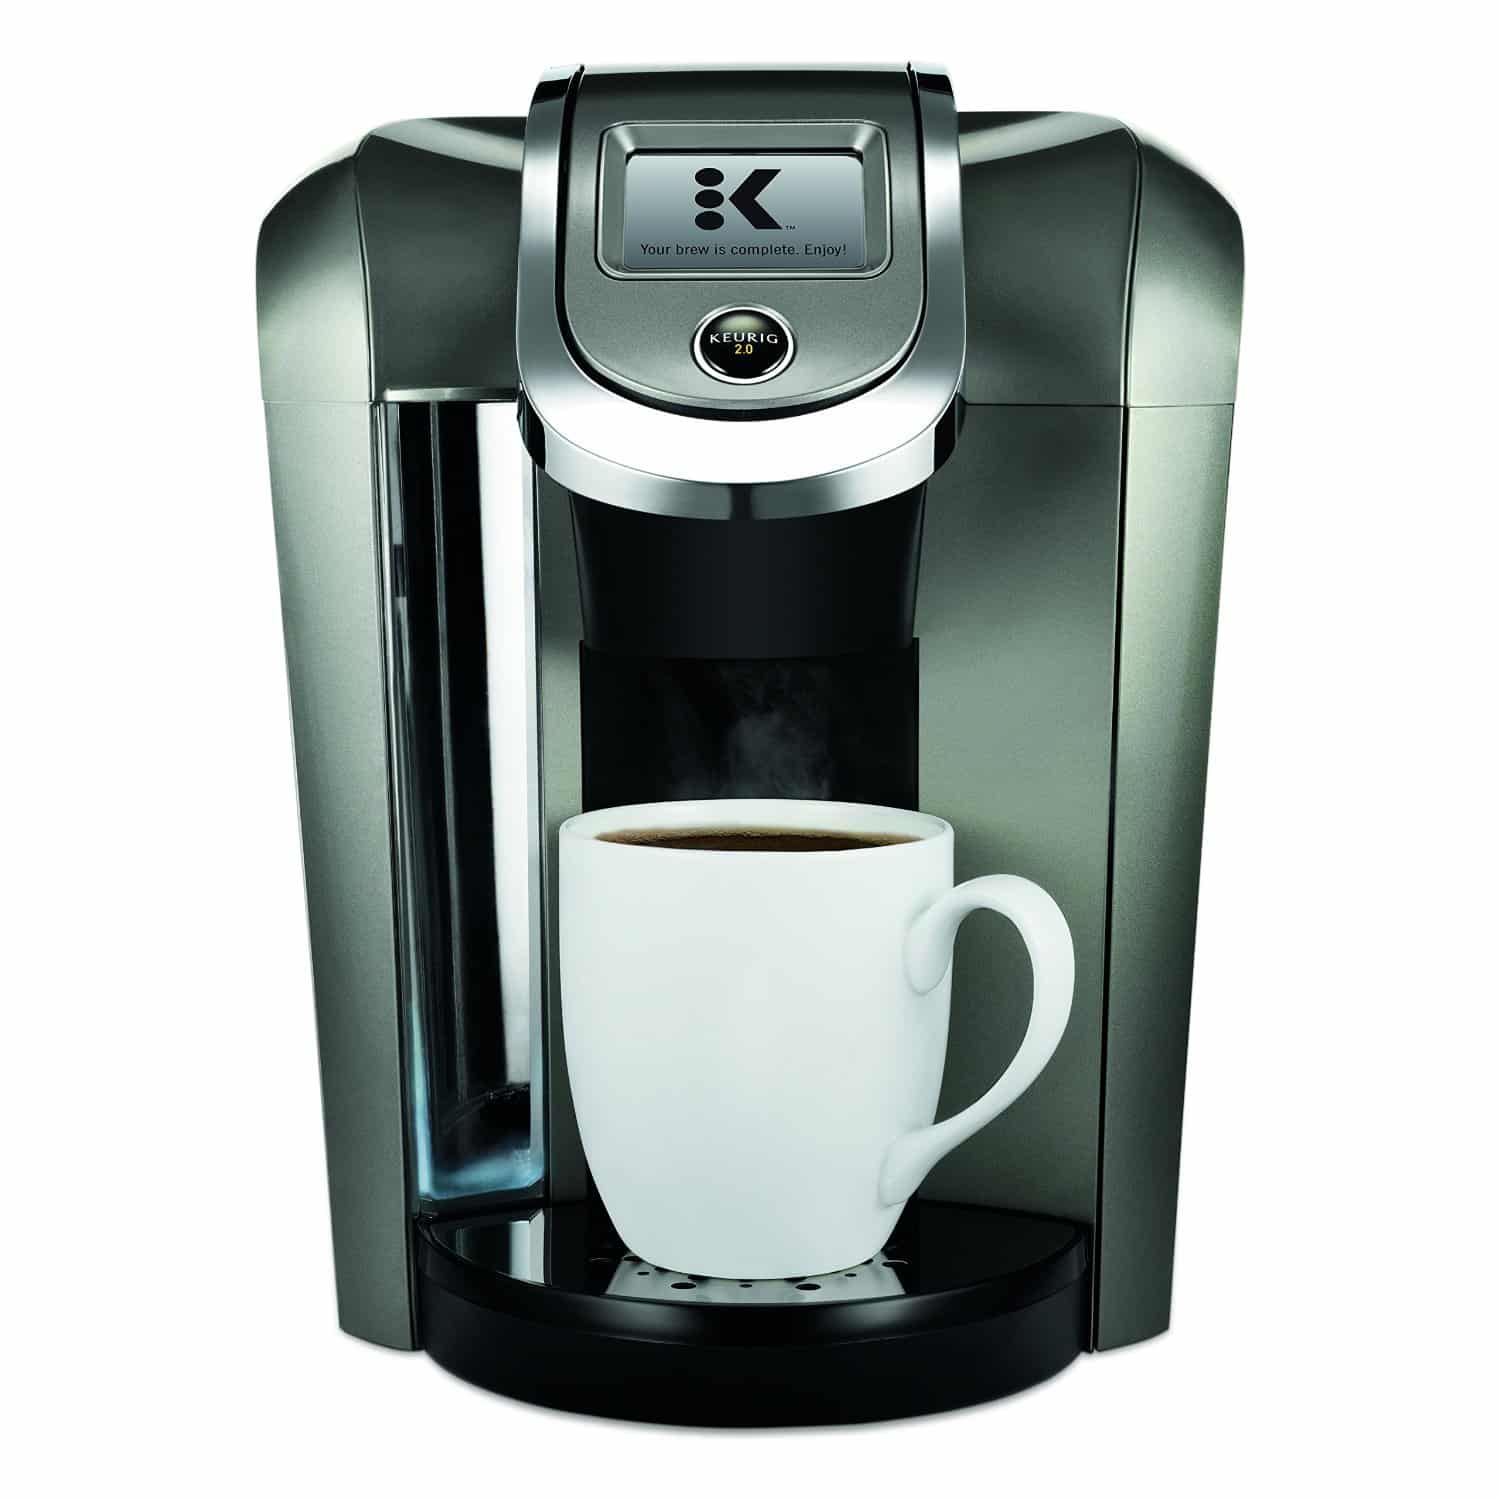 Keurig K575 Coffee Maker Reviews and Deals